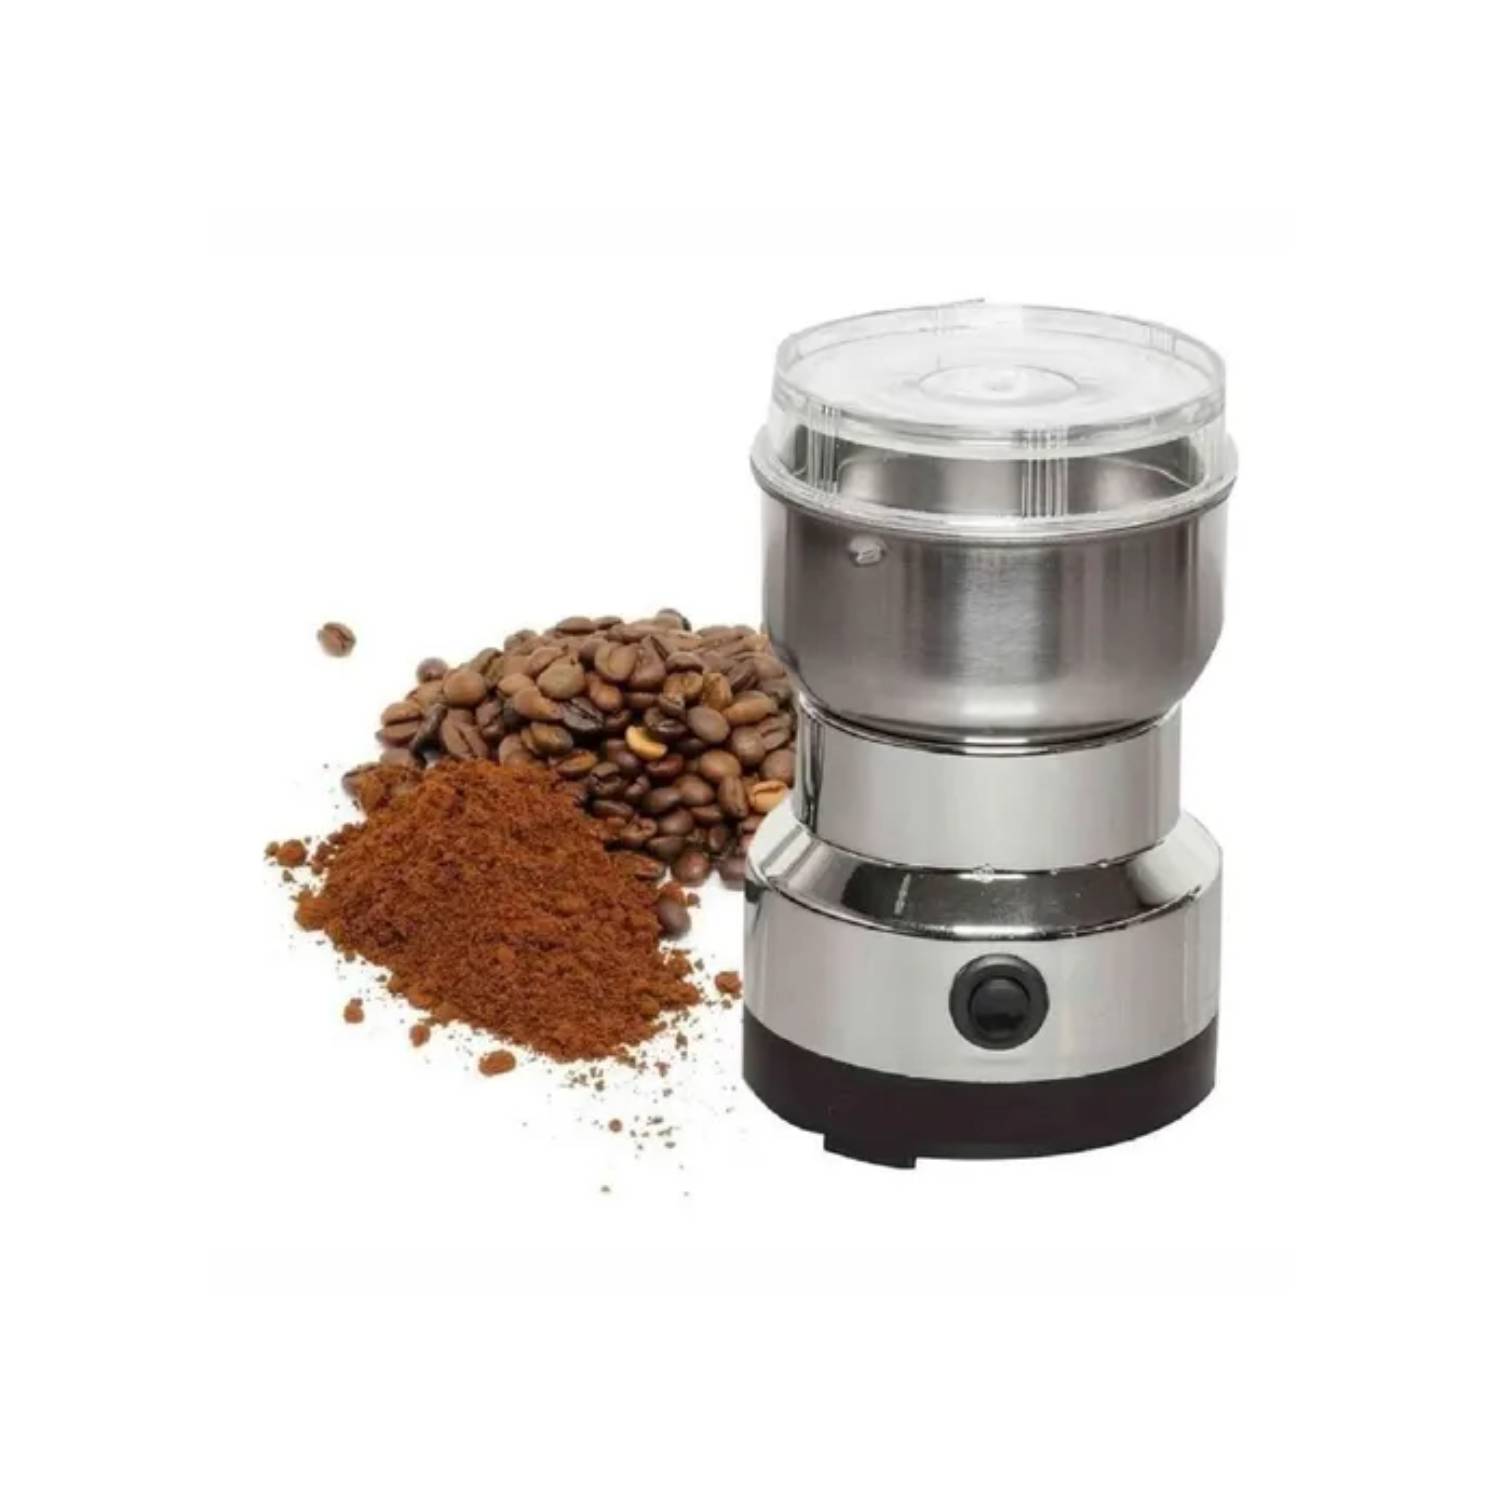 Molino Triturador Moledor De Café y granos varios CafeCrush Precision®